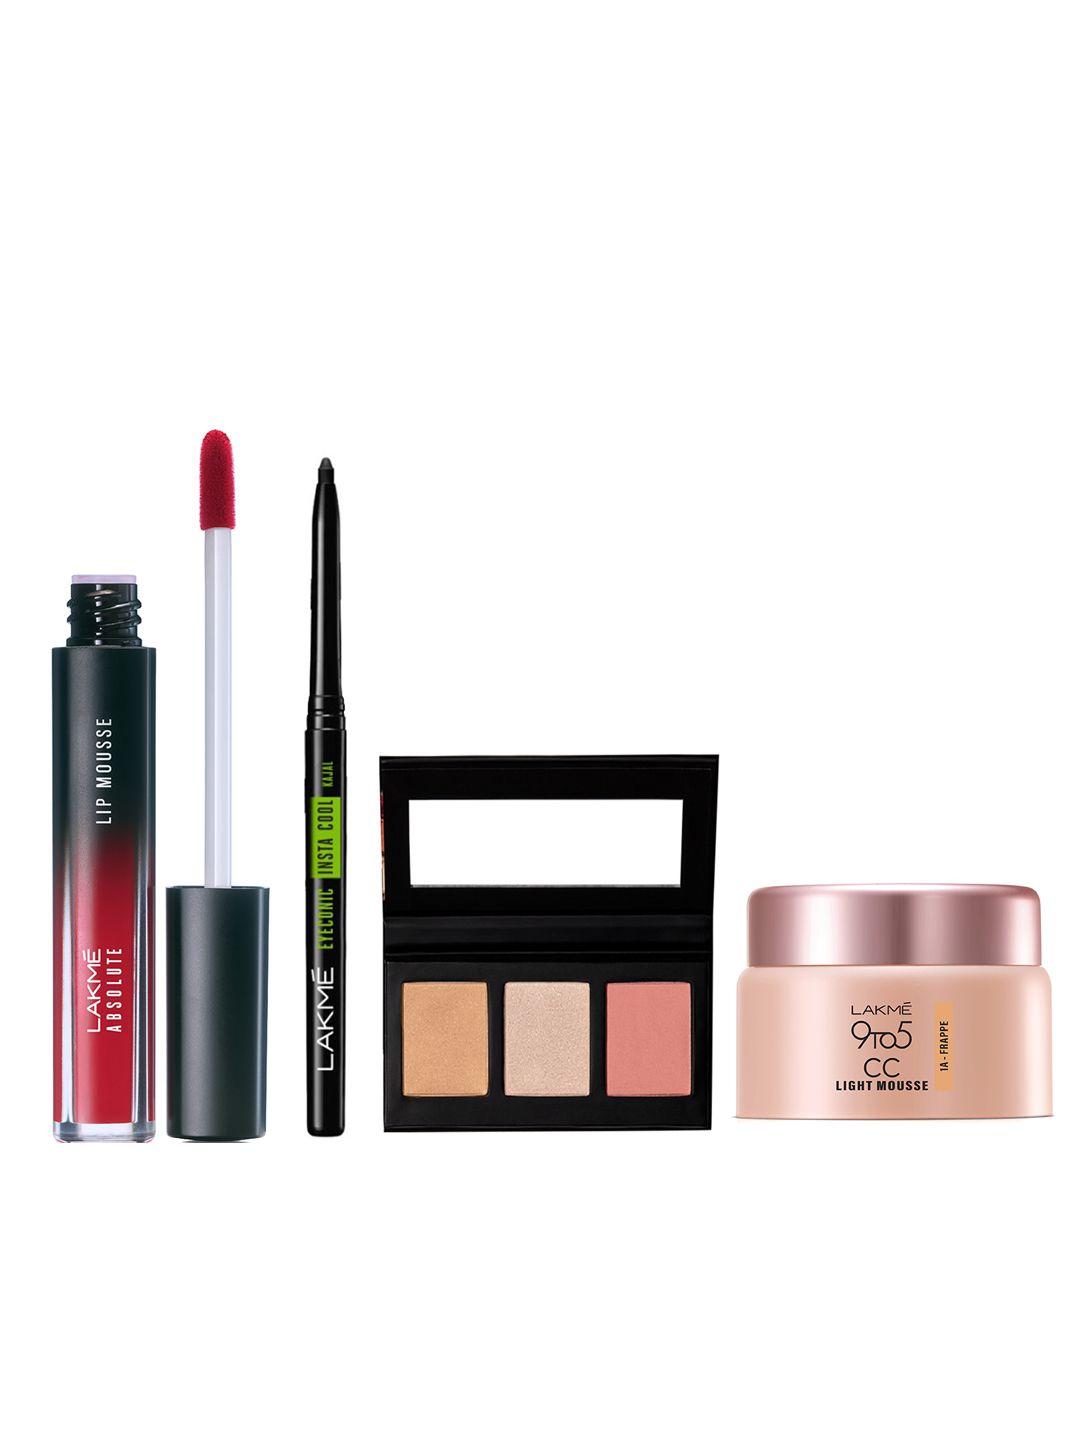 lakme makeup gift set - lipstick + kajal + facelift palette + cc cream